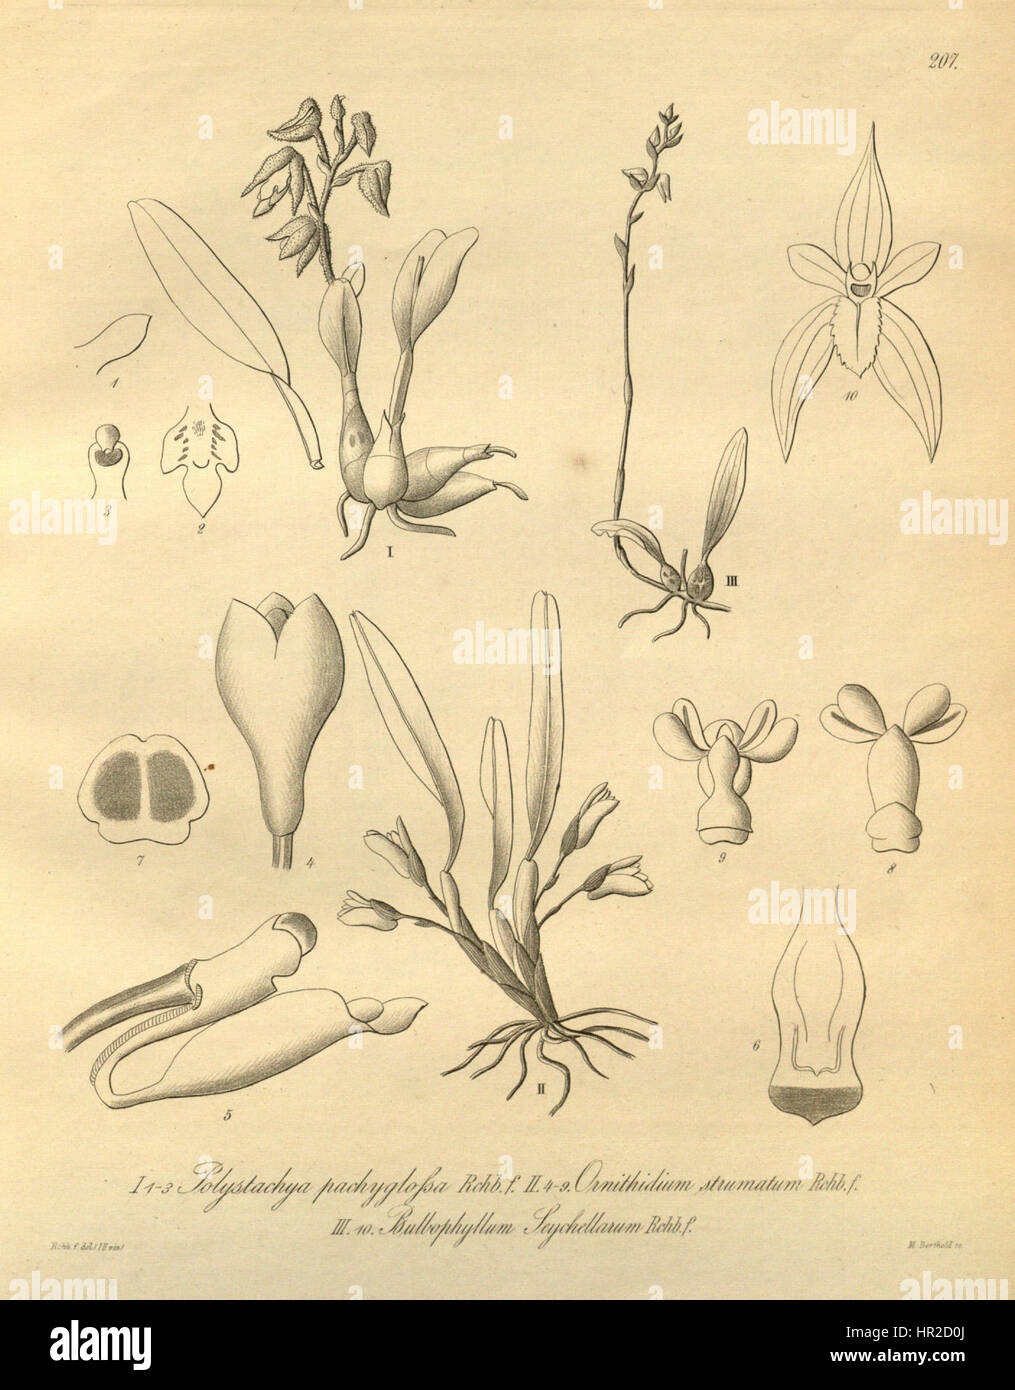 Polystachya sandersonii (as P. pachyglossa) - Camaridium strumatum (as Ornithidium s.) - Bulbophyllum intertextum (as B. seychellarum) - Xenia 3 pl 207 Stock Photo